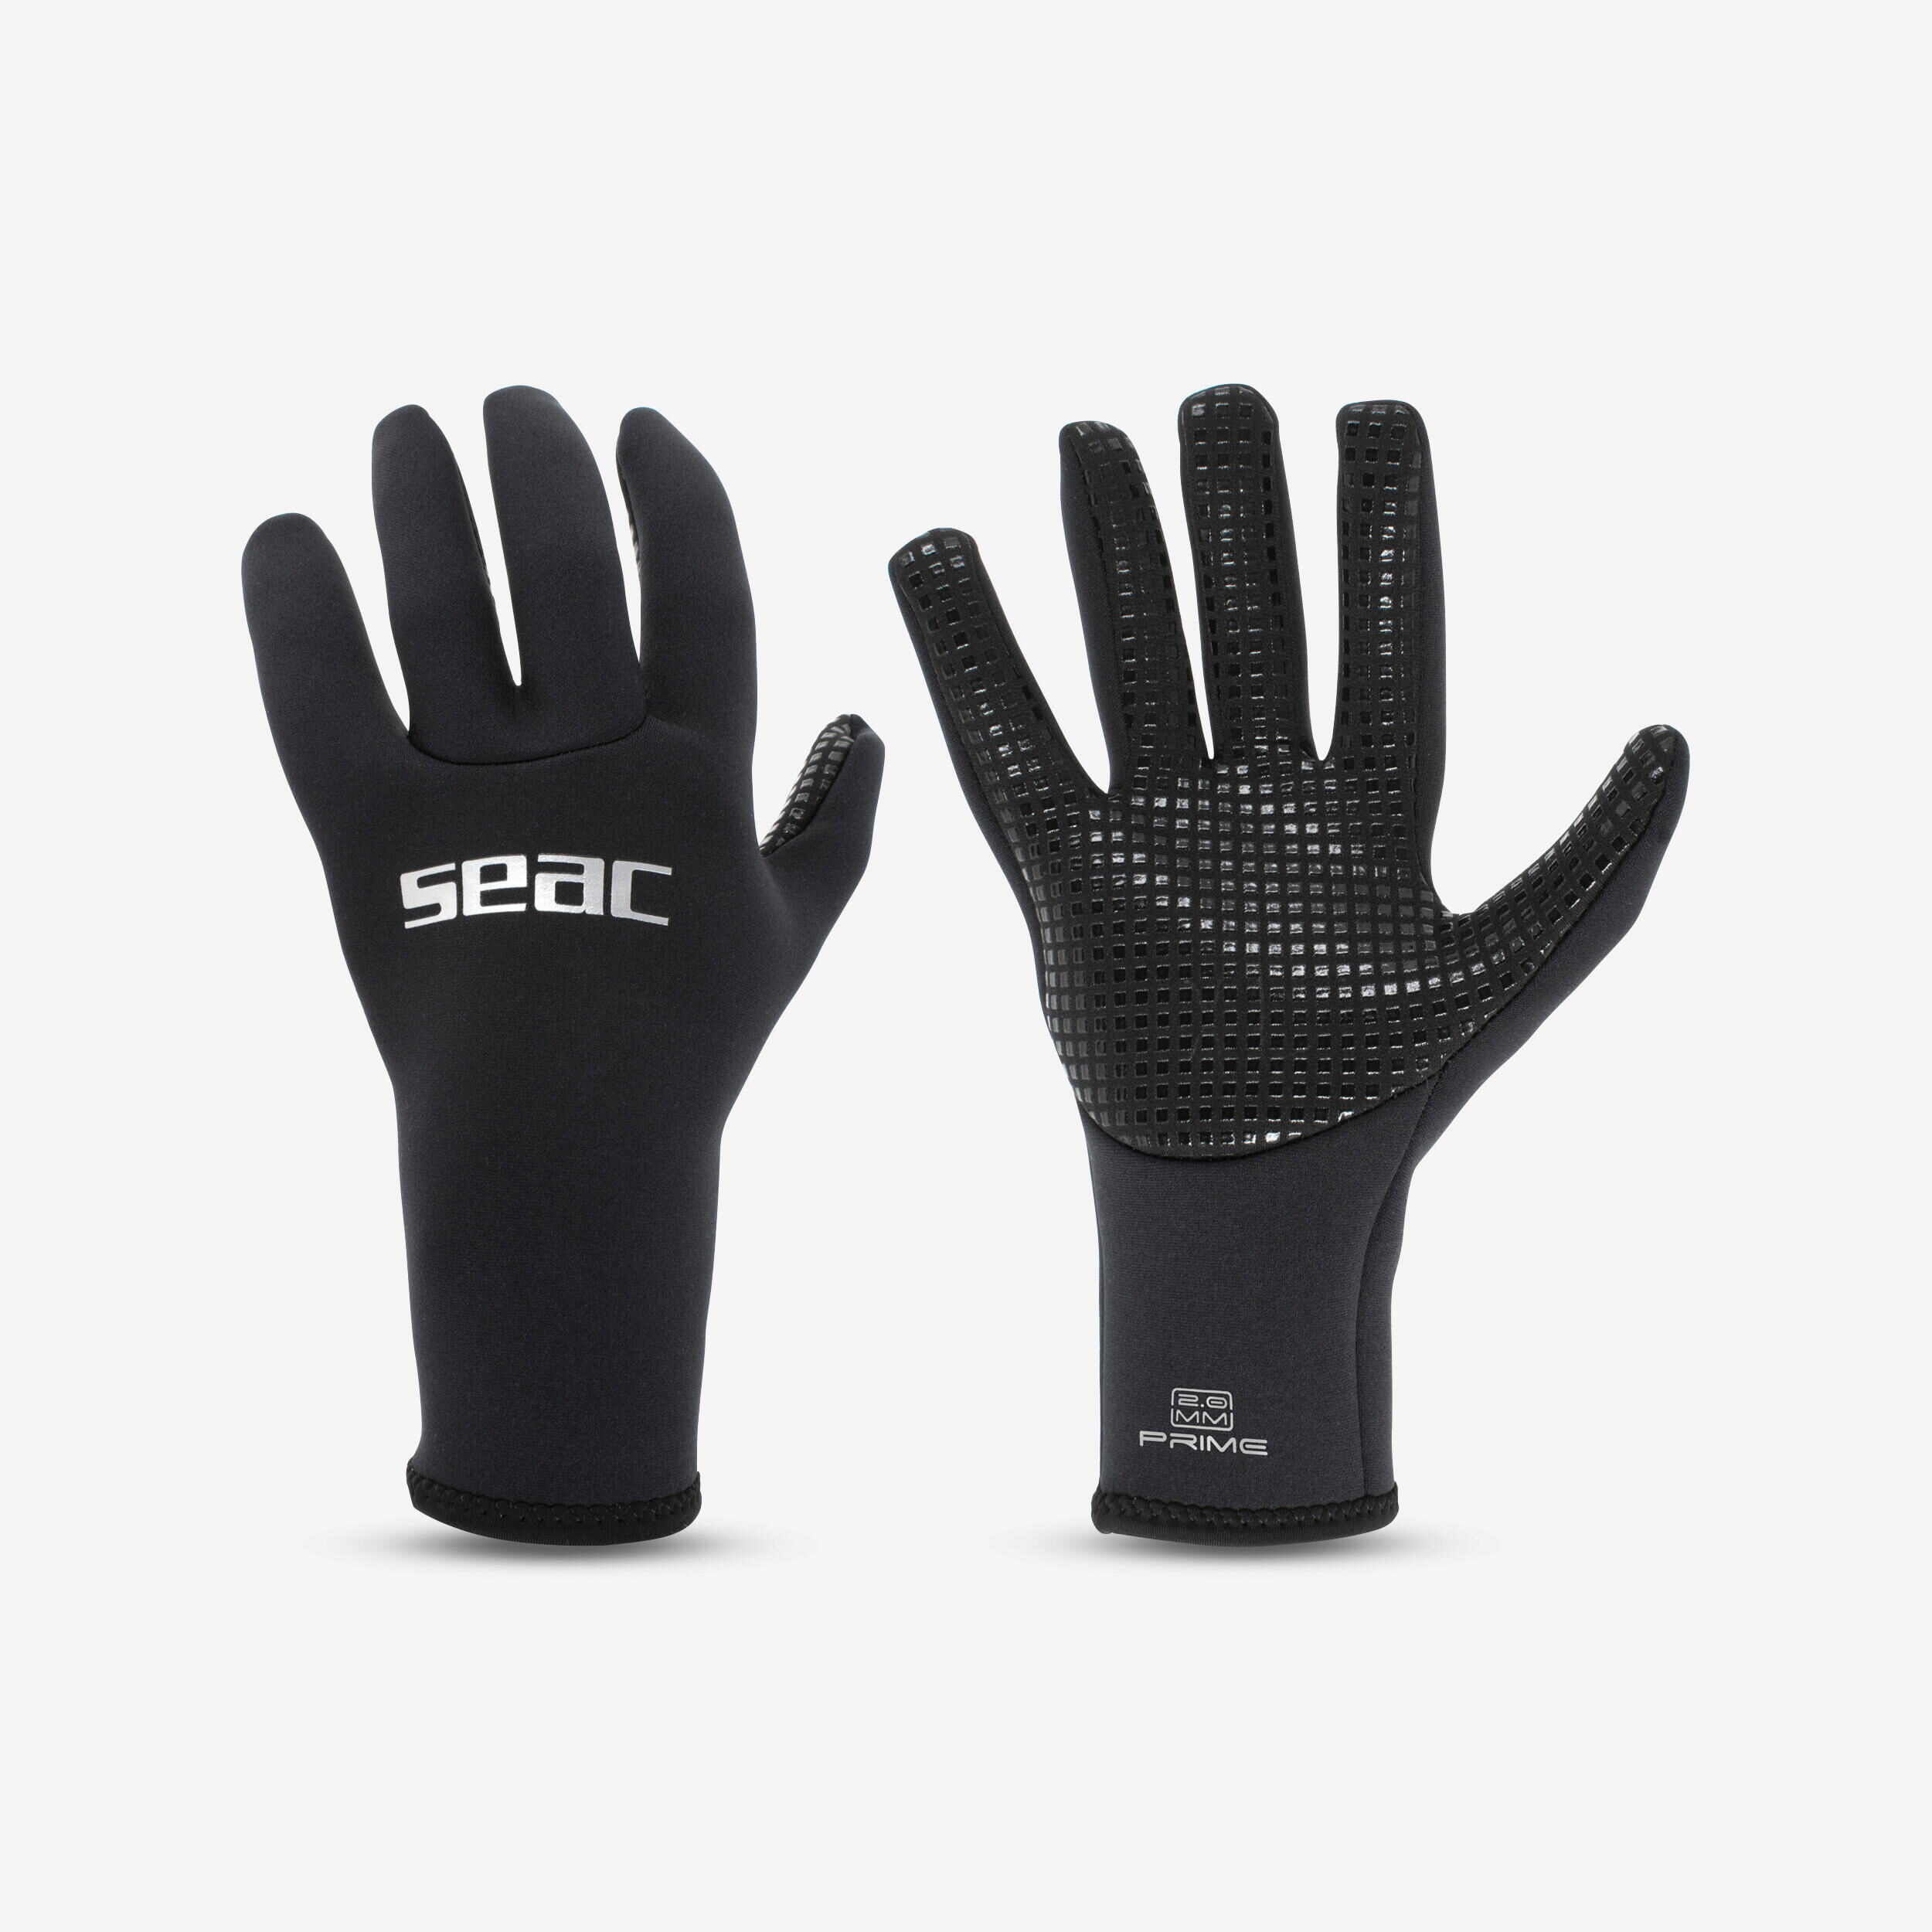 SEAC Scuba diving neoprene gloves Seac Prime 2 mm